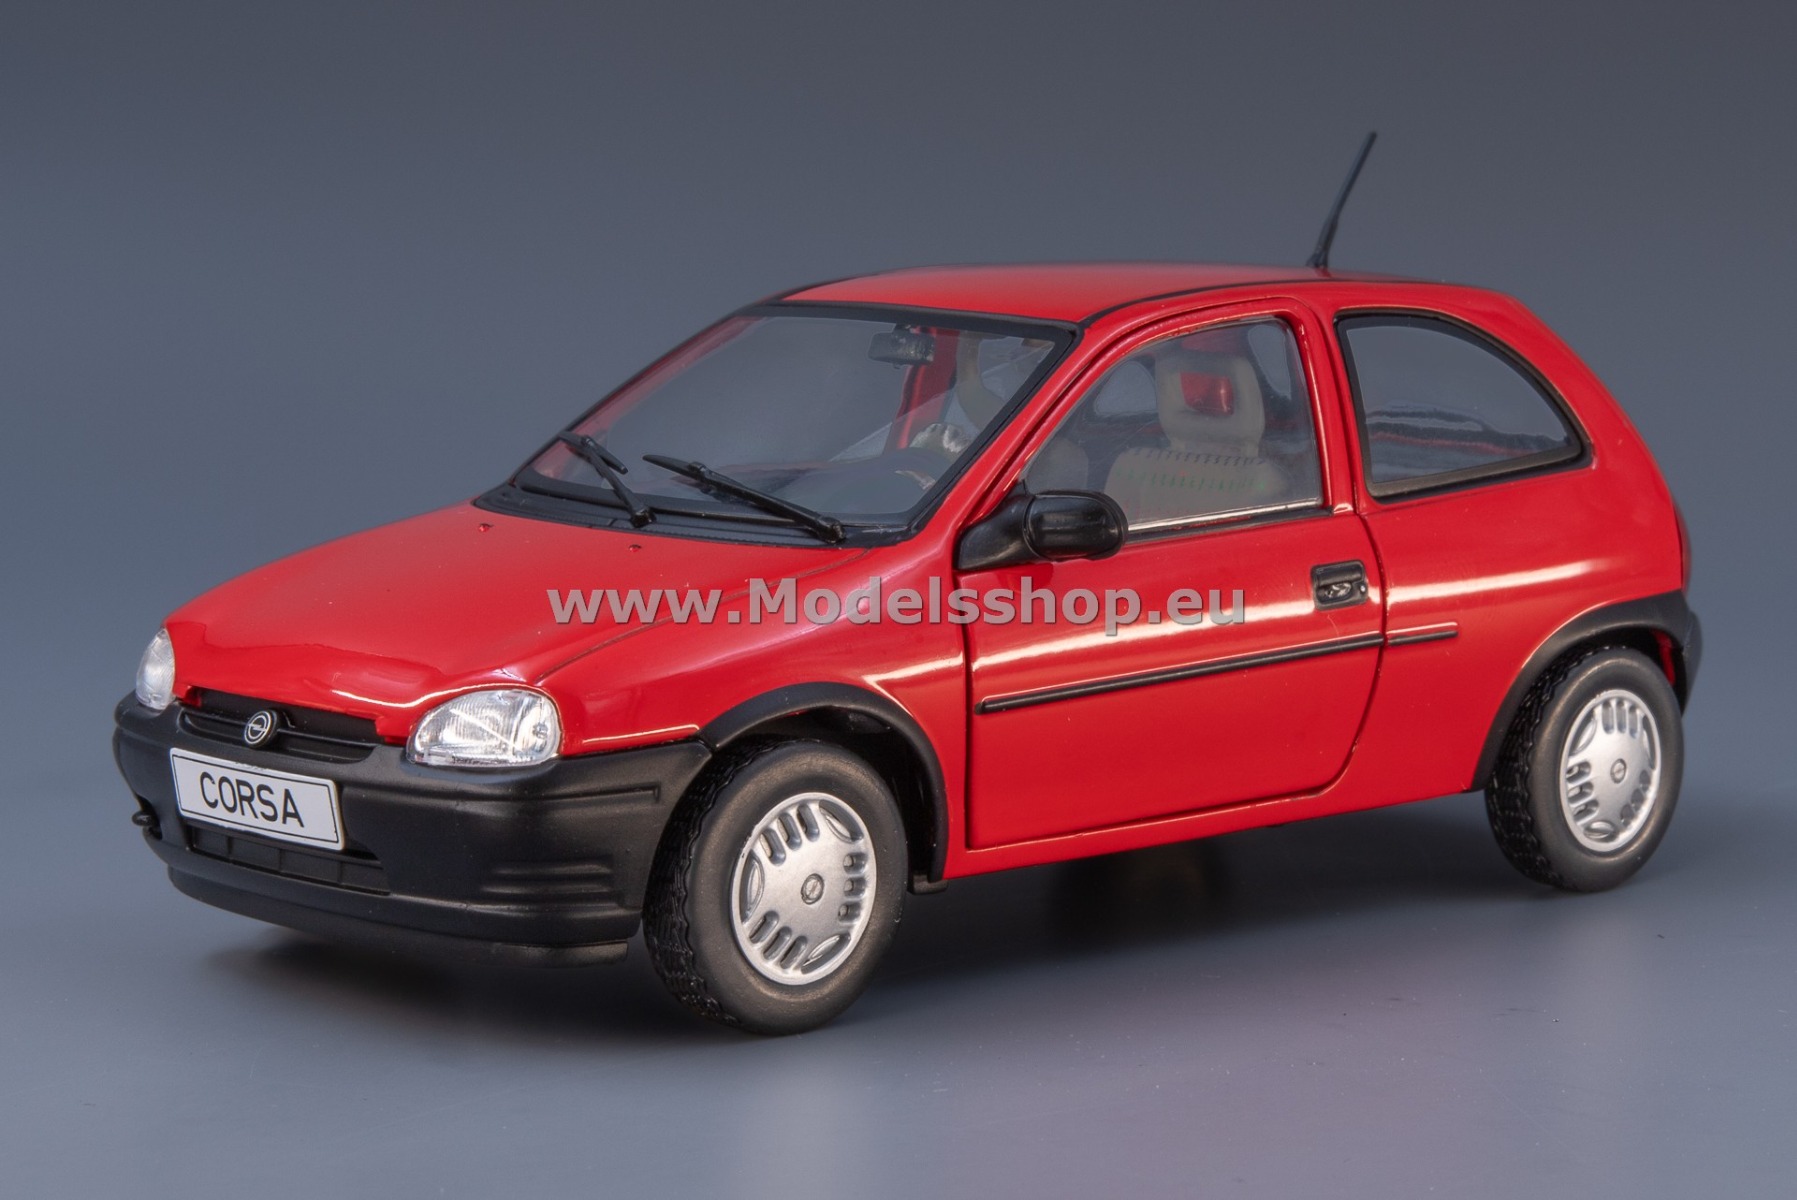 WhiteBox WB124191-O Opel Corsa B, 1993 /red/